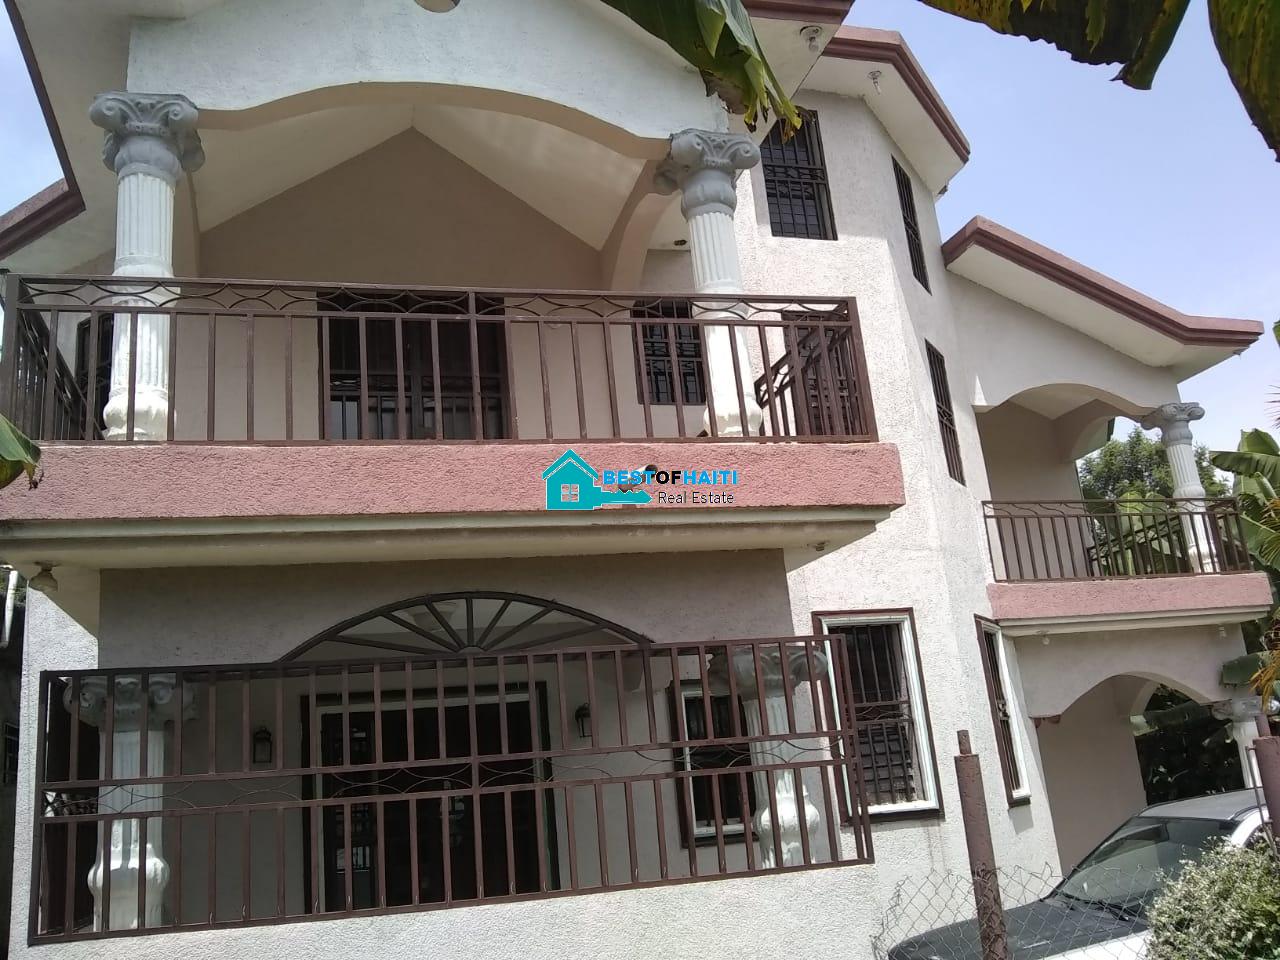 Single Family Home for Rent in Montagne Noire, Petion-Ville, Haiti - Cheap